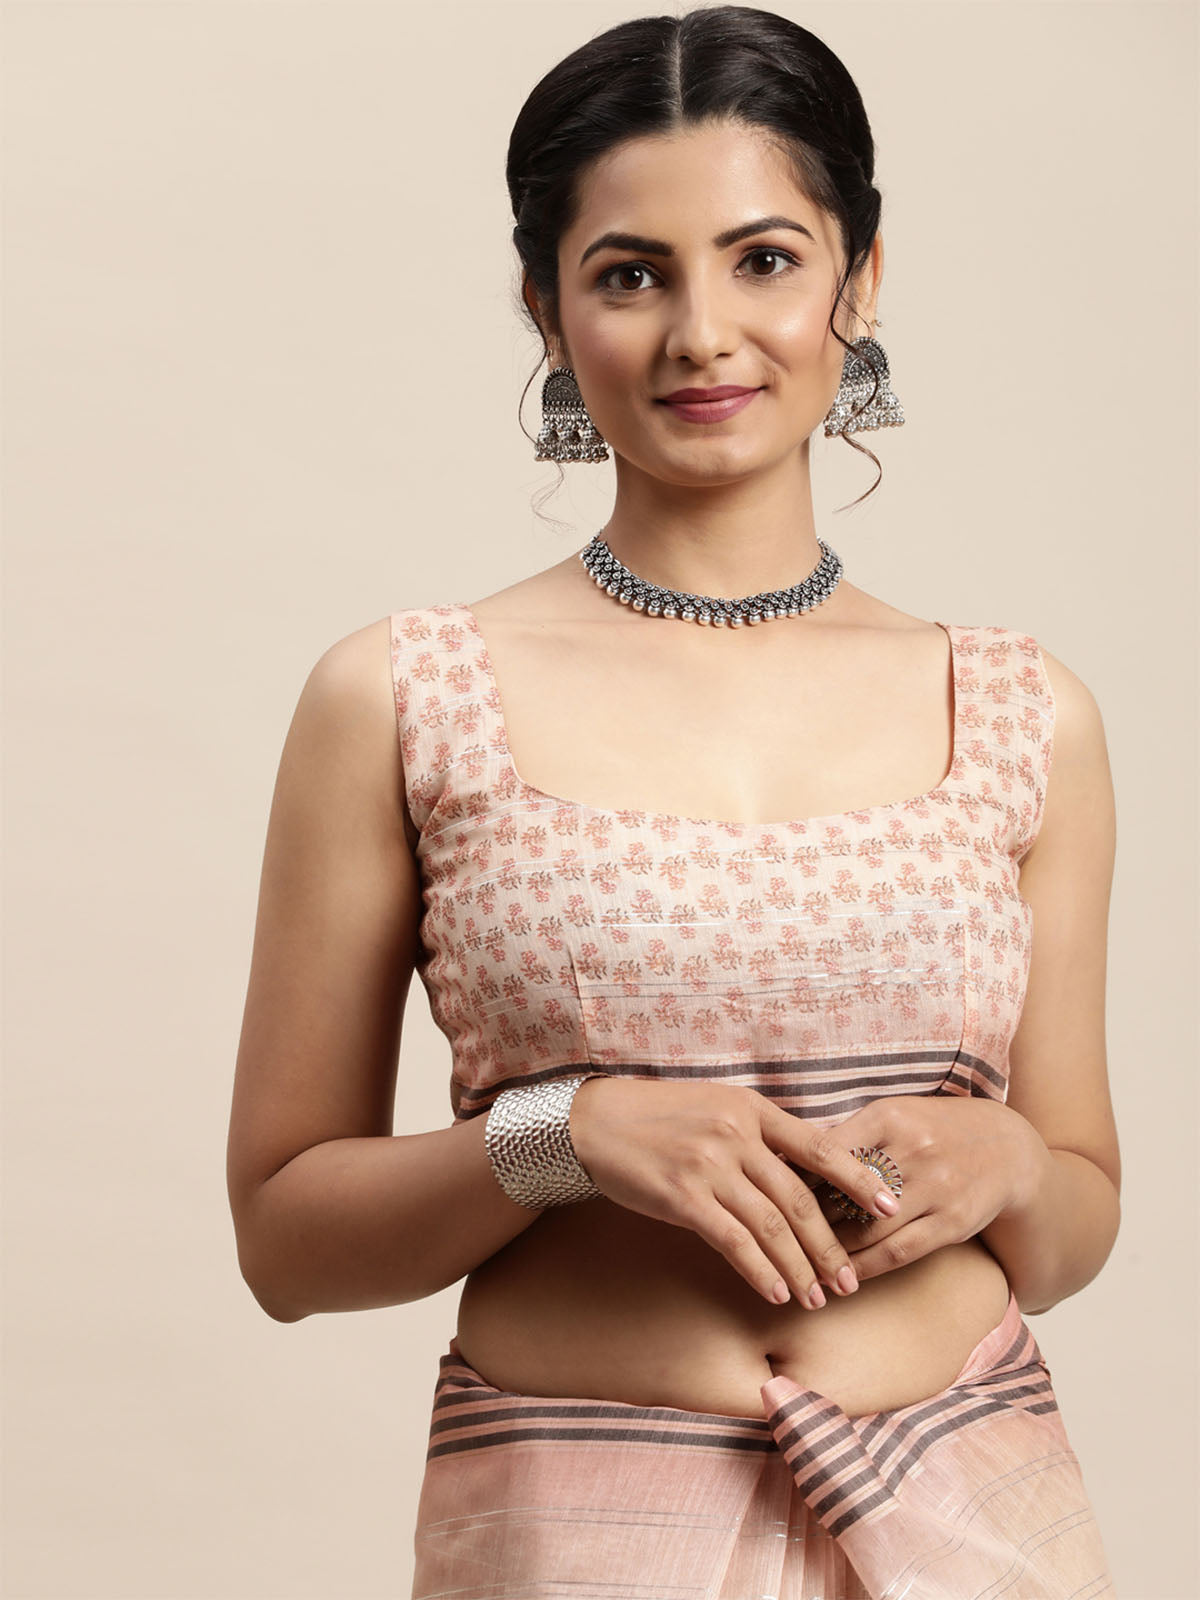 Women'S Soft Silk Cream Printed Designer Saree With Unstitched Blouse